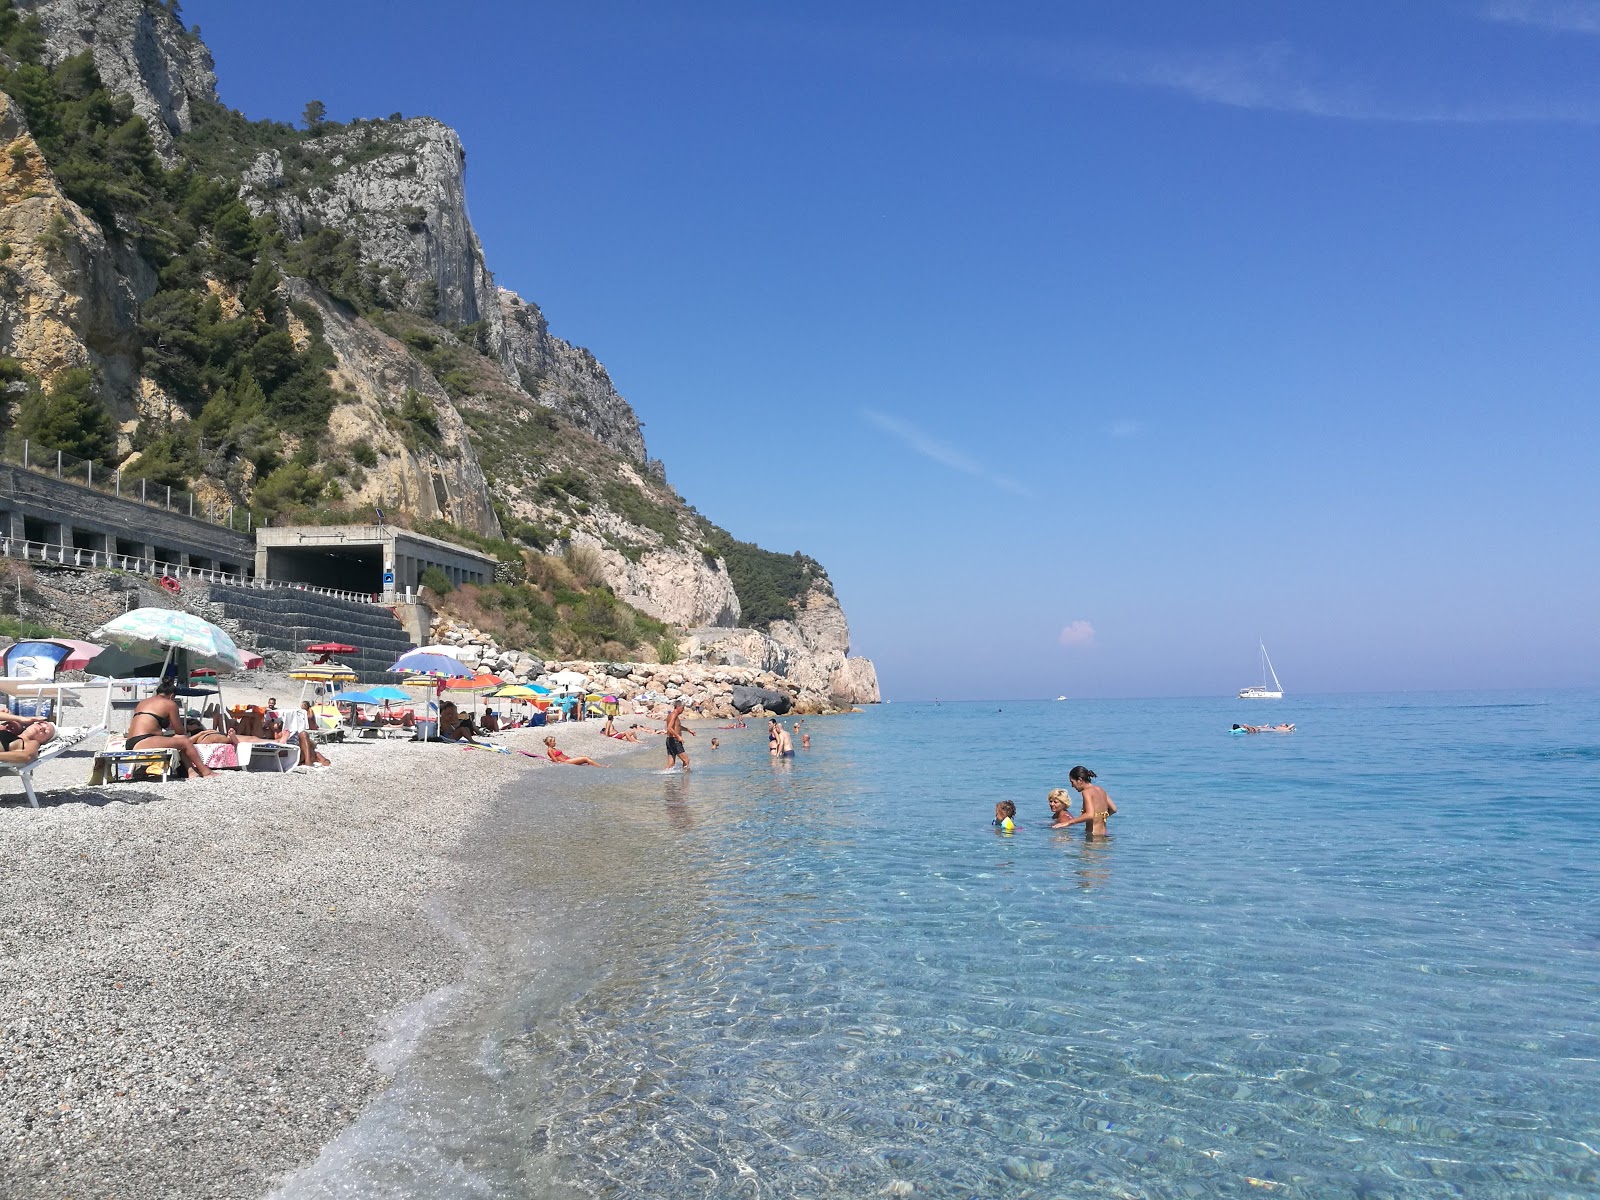 Photo of Spiaggia del Malpasso with brown fine pebble surface